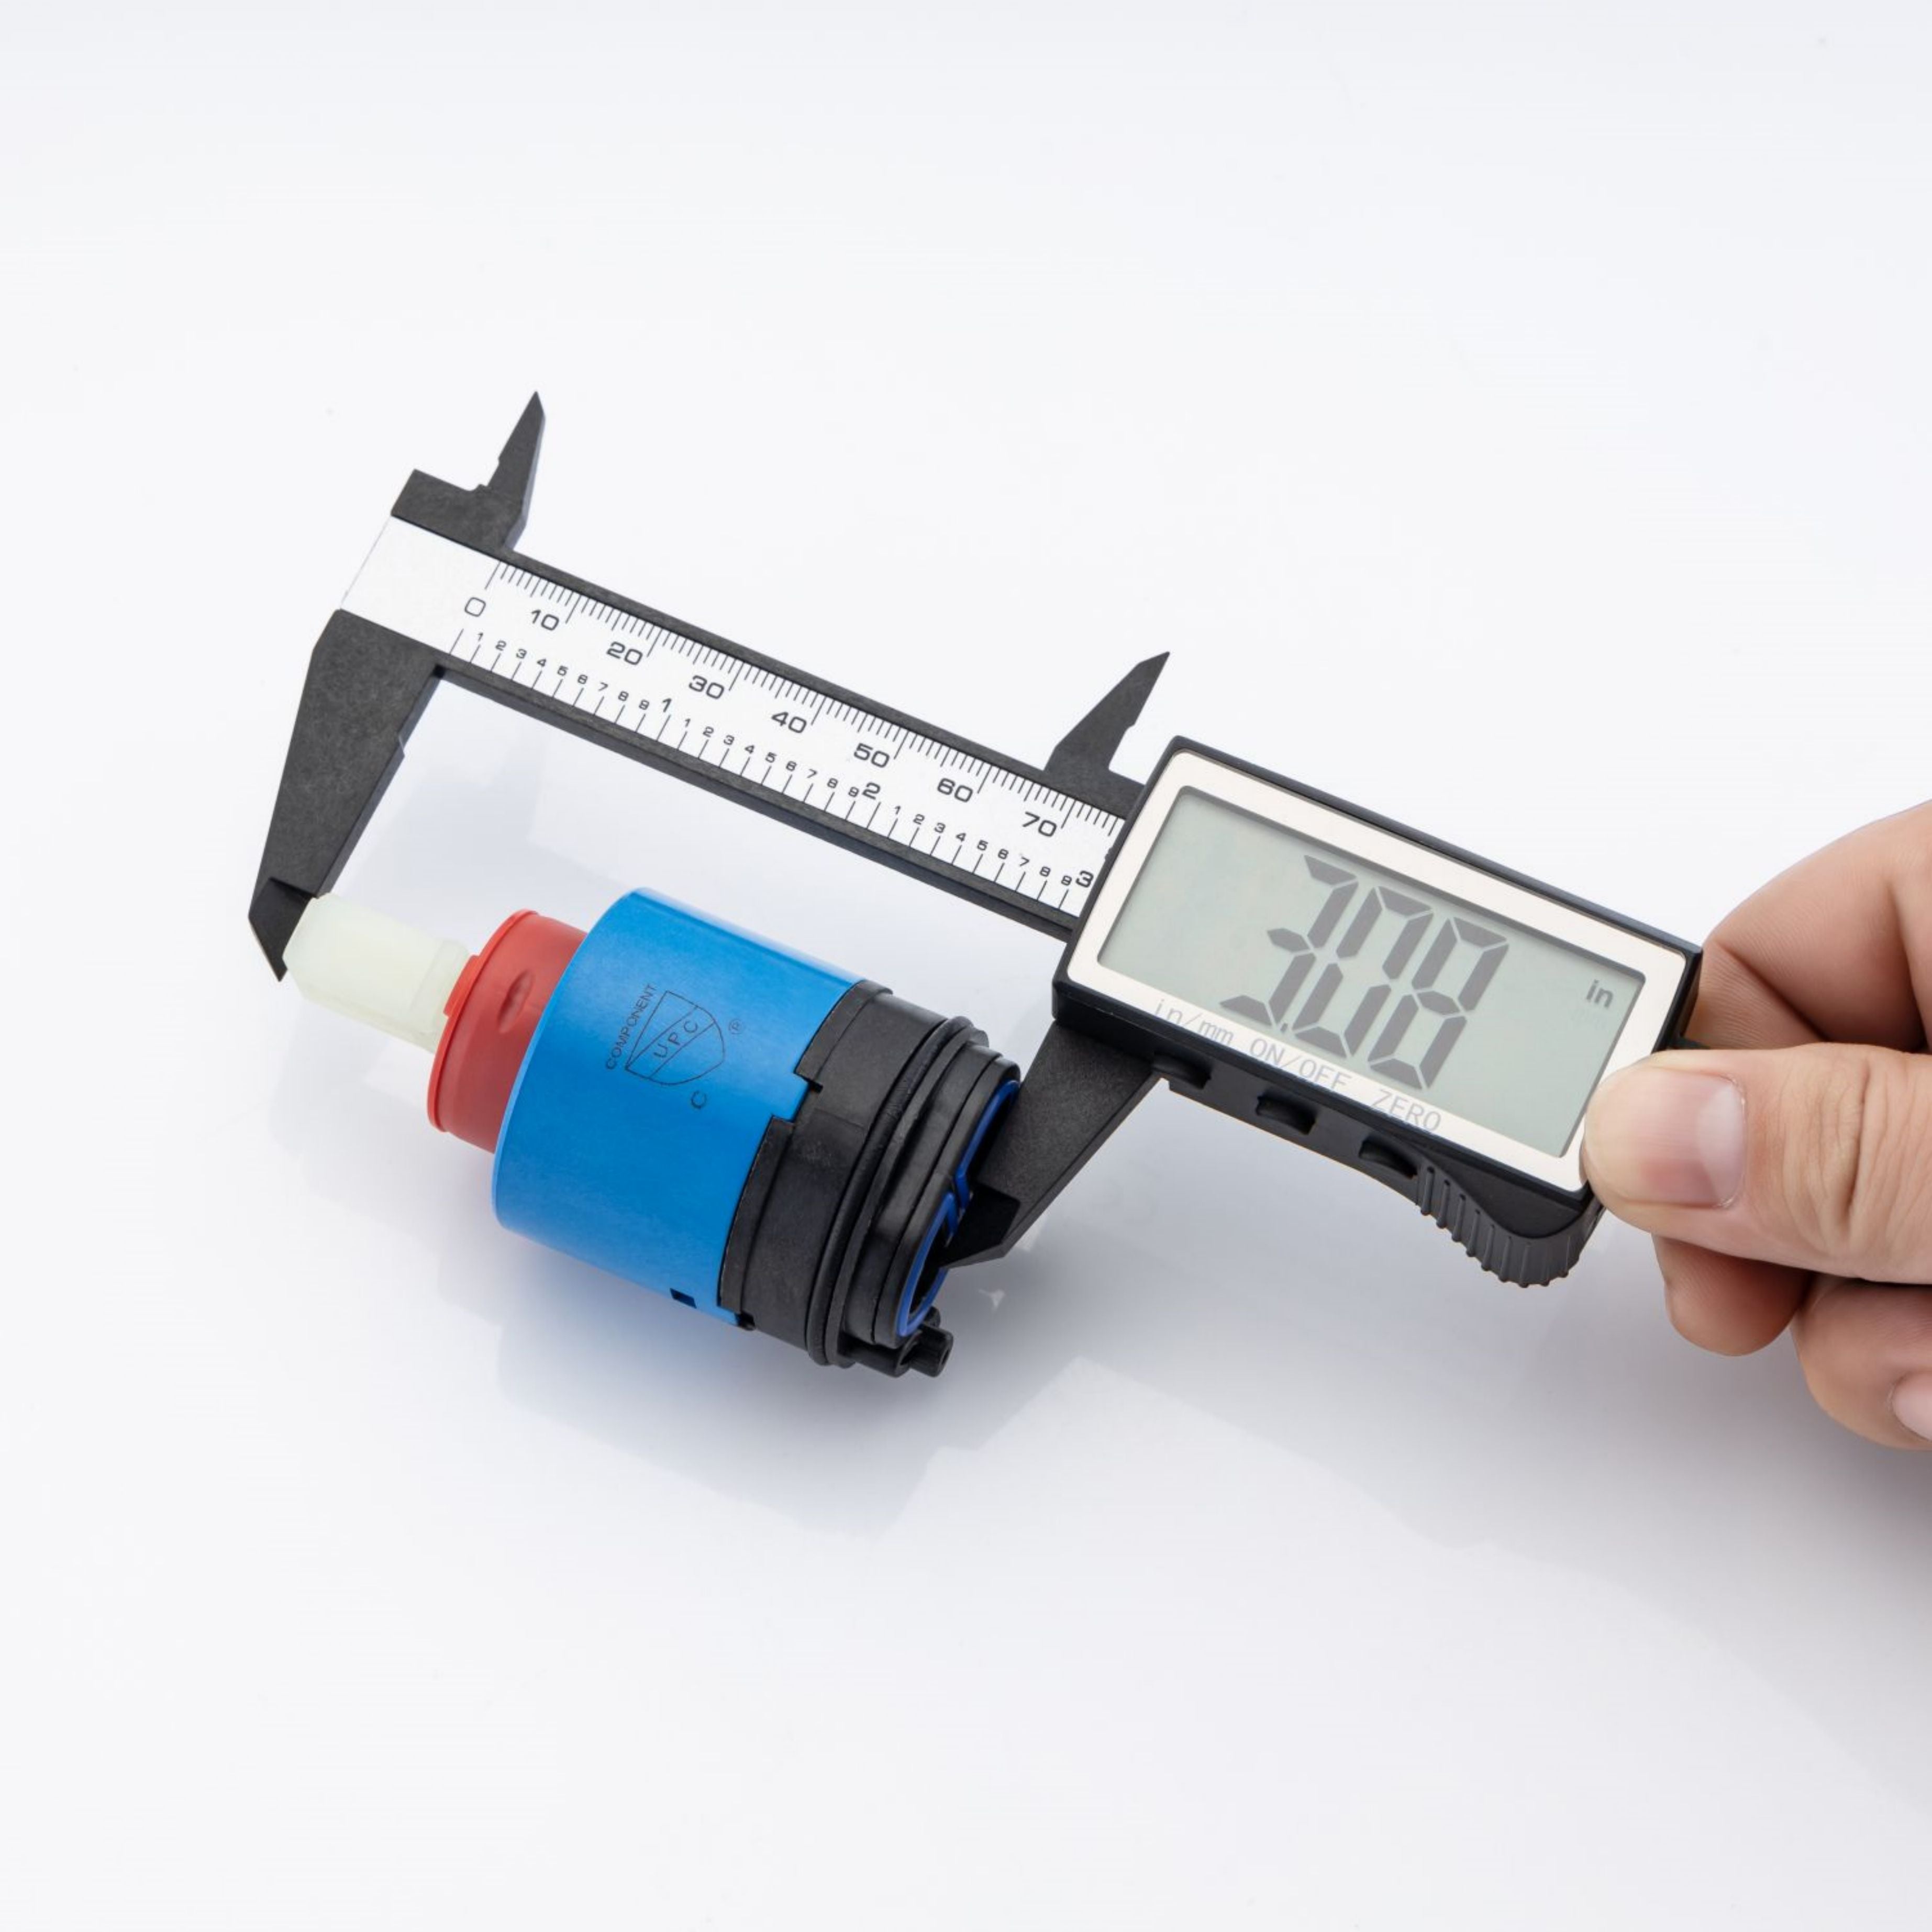 Shower Faucet Pressure Balance Cartridge PJ018A GP40H01